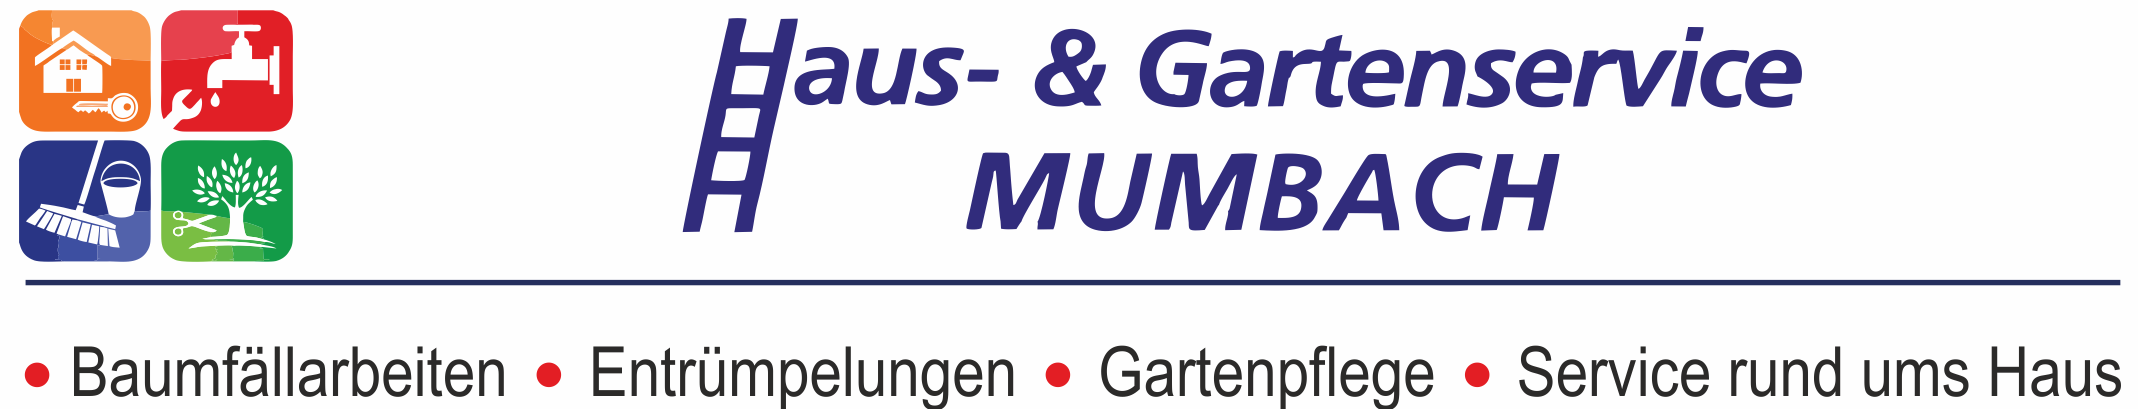 Haus- & Gartenservice Mumbach